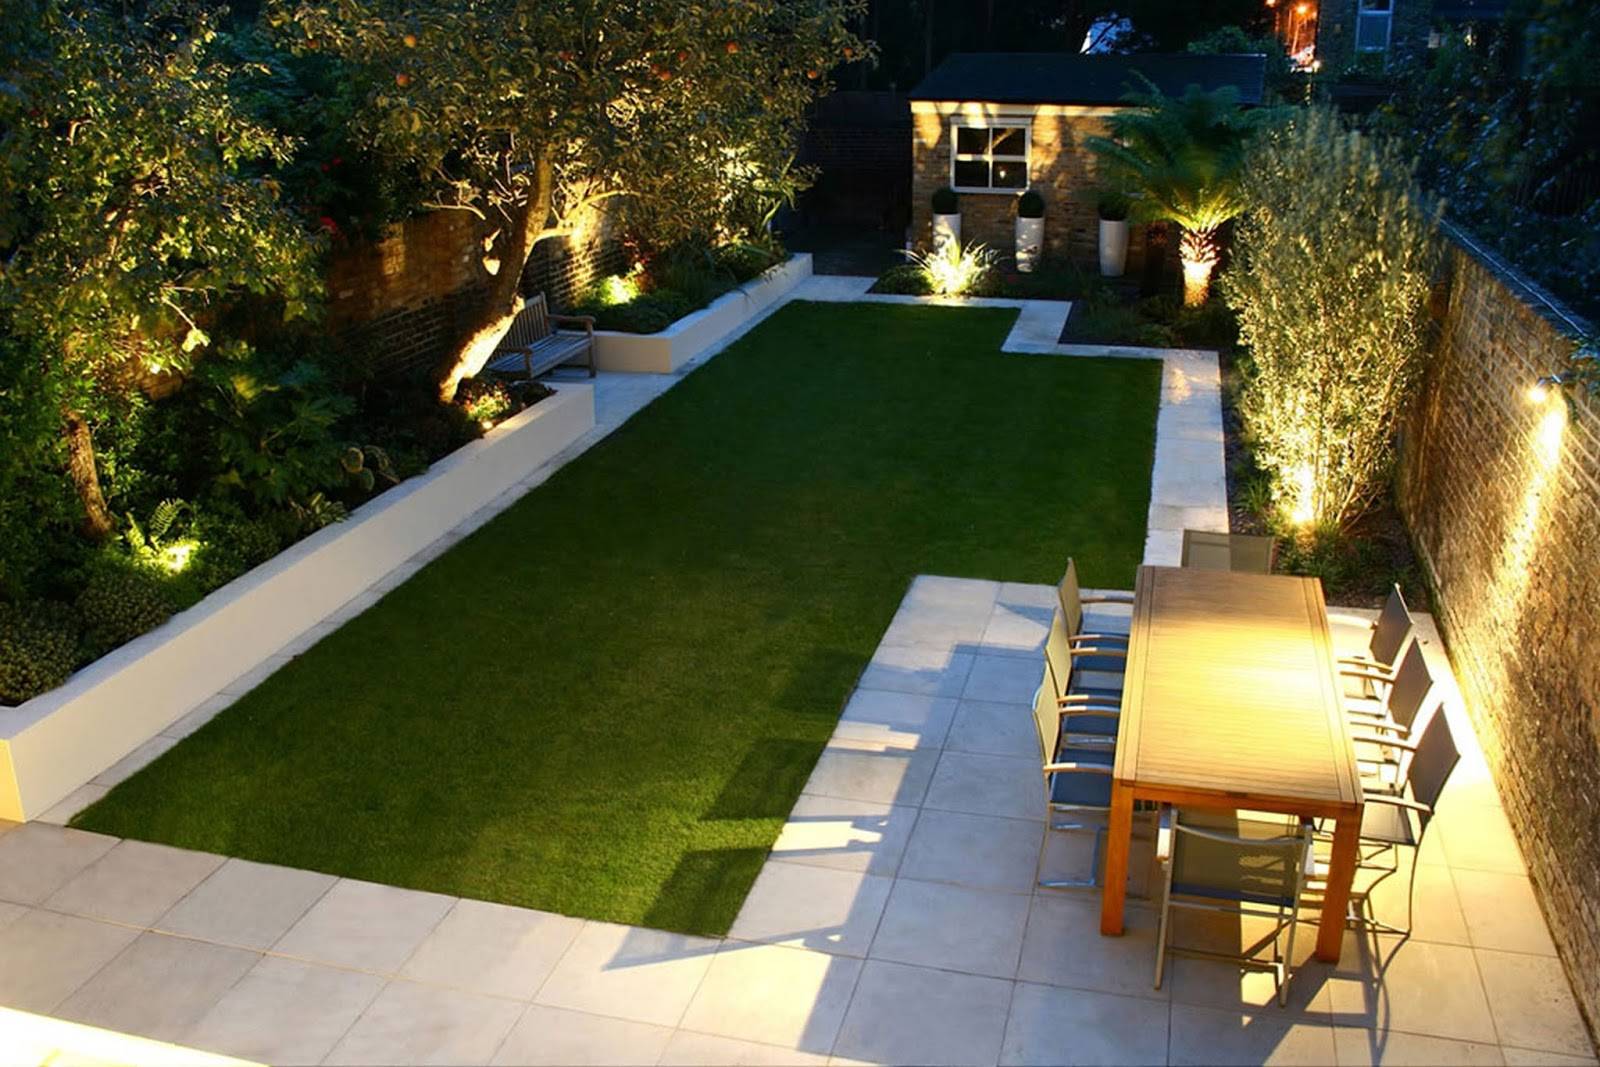 Cool Front Yard Garden Landscaping Design Ideas